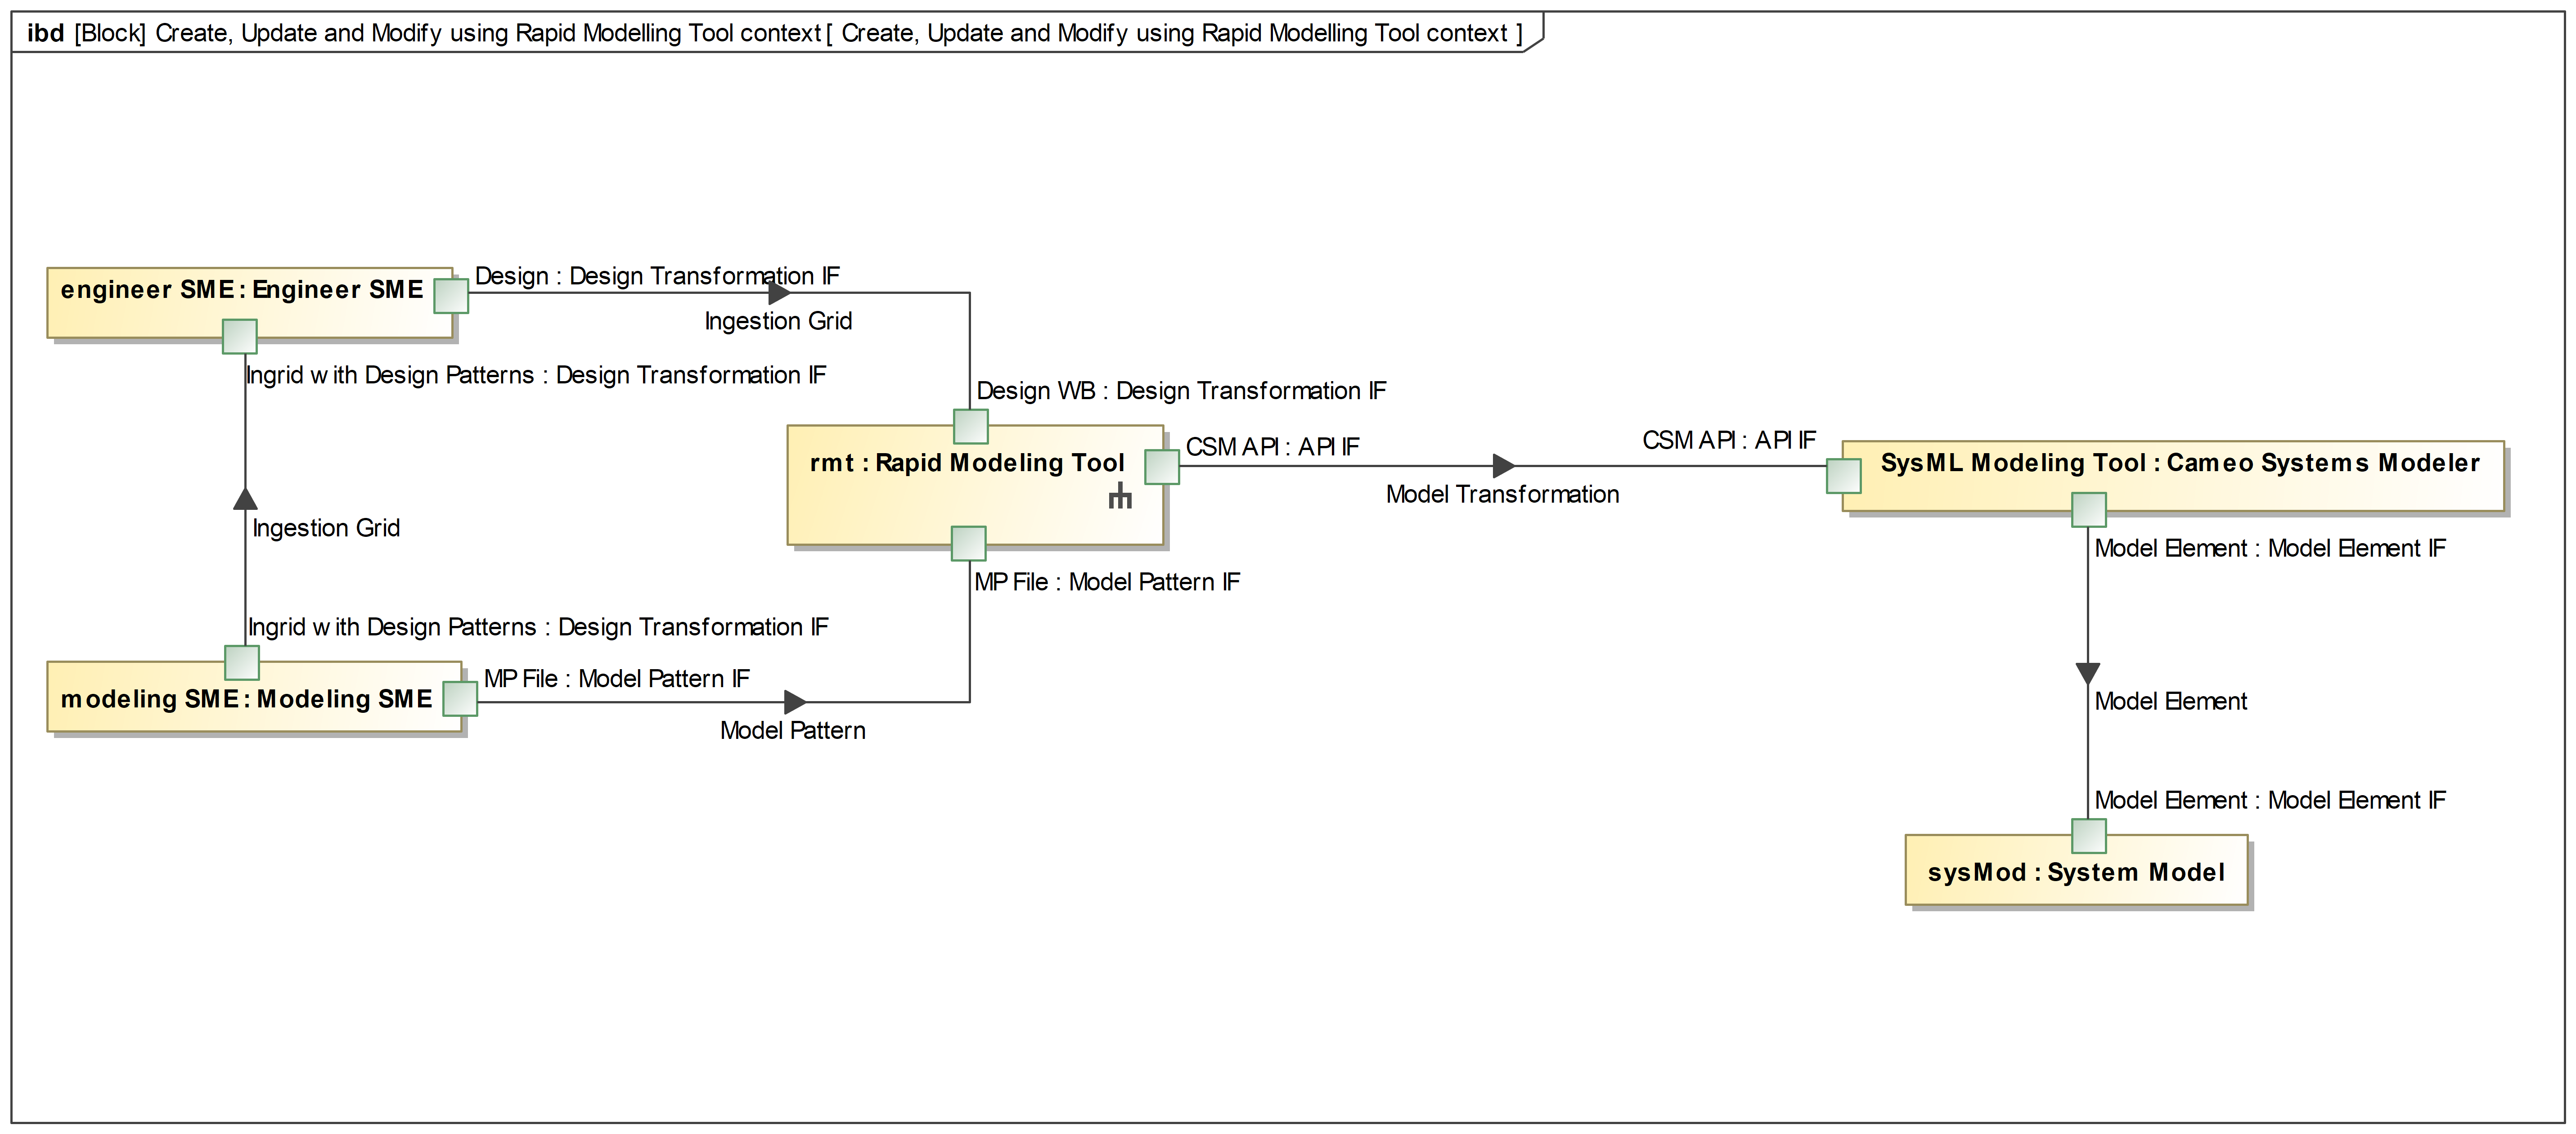 Rapid Modeling Tool Context - Internal Flows.png